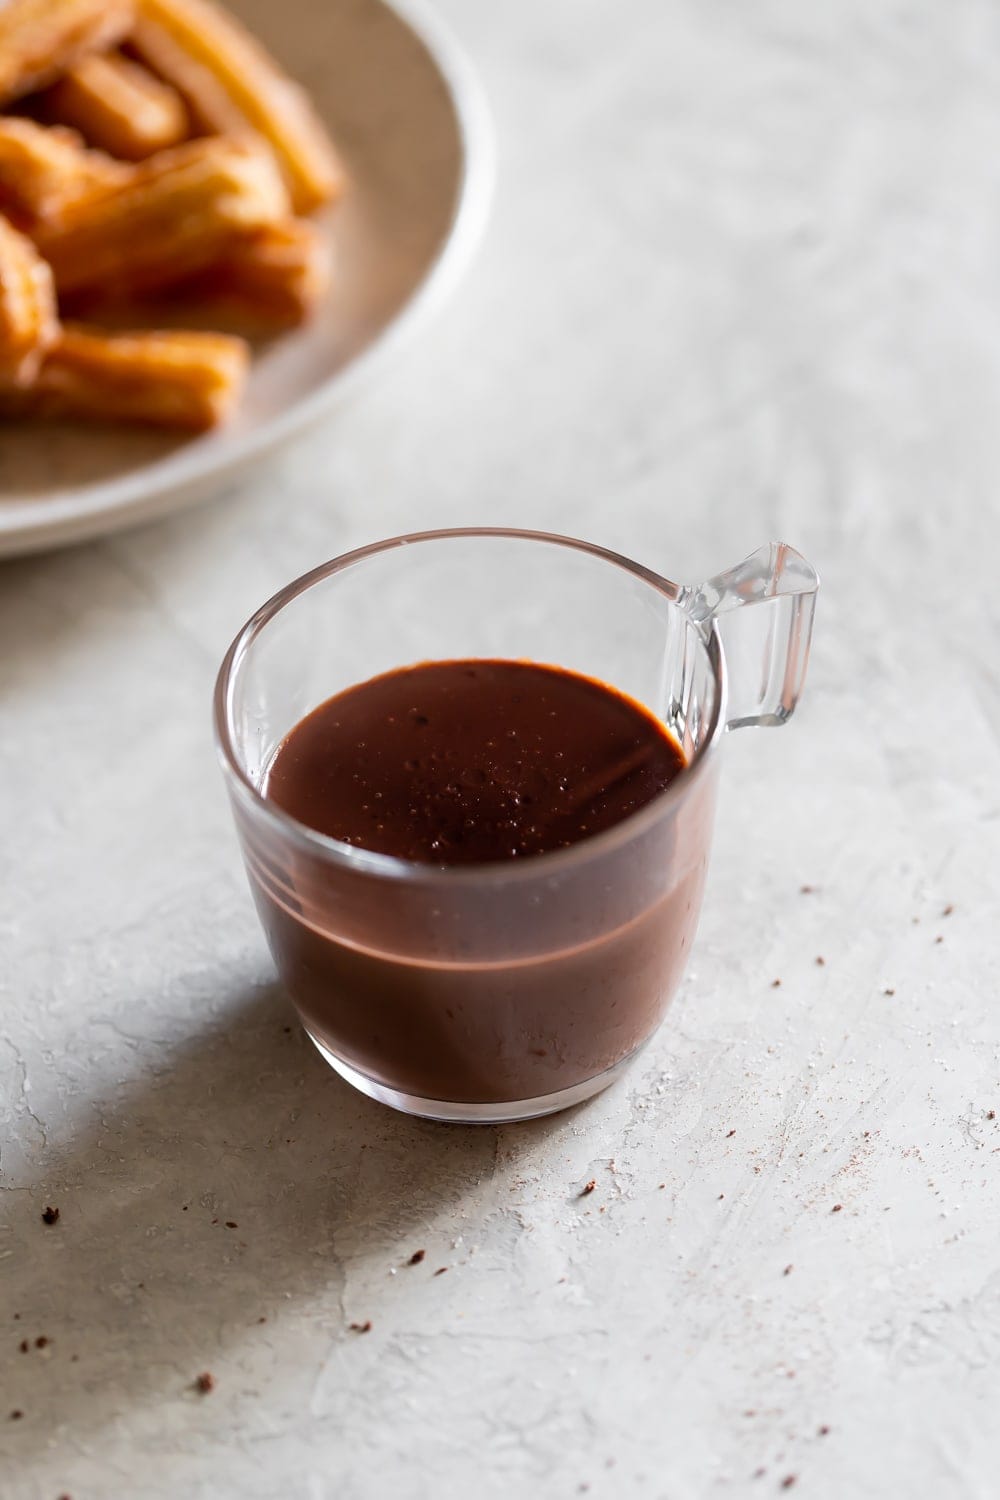 Spanish Hot Chocolate (Chocolate Caliente) - A Sassy Spoon